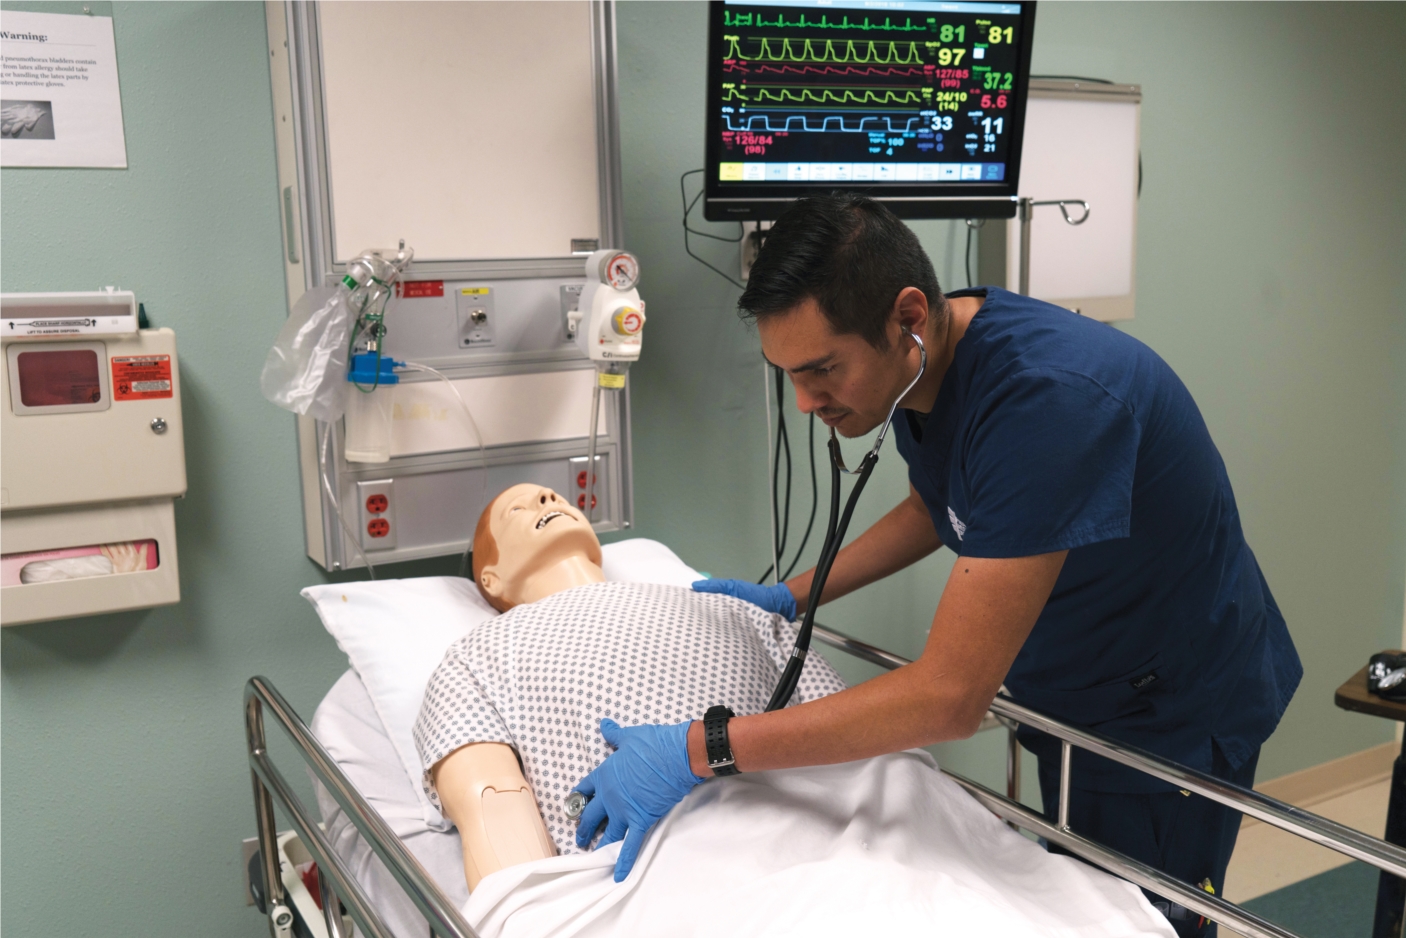 Pima Medical Institute Practical Nursing student 
conducting a patient assessment during simulation training. 